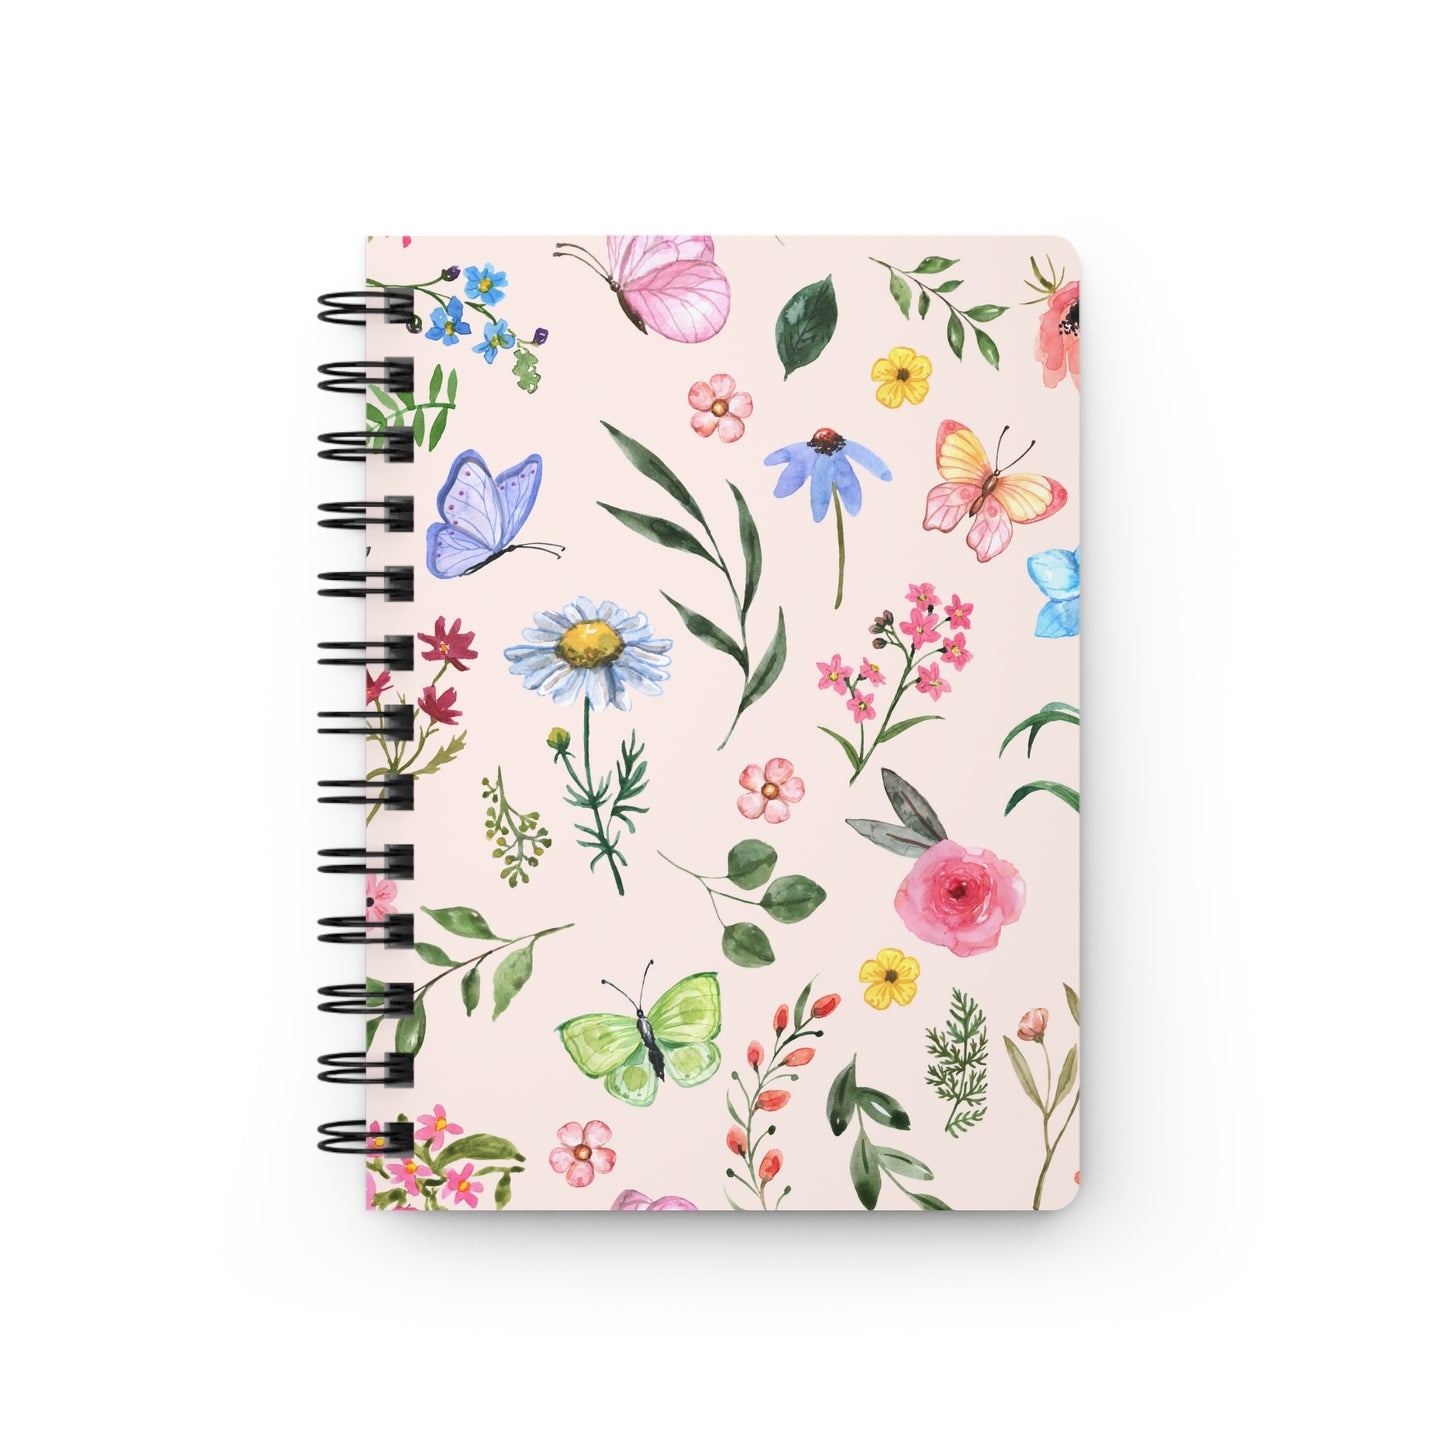 Spring Daisies and Butterflies Spiral Bound Journal